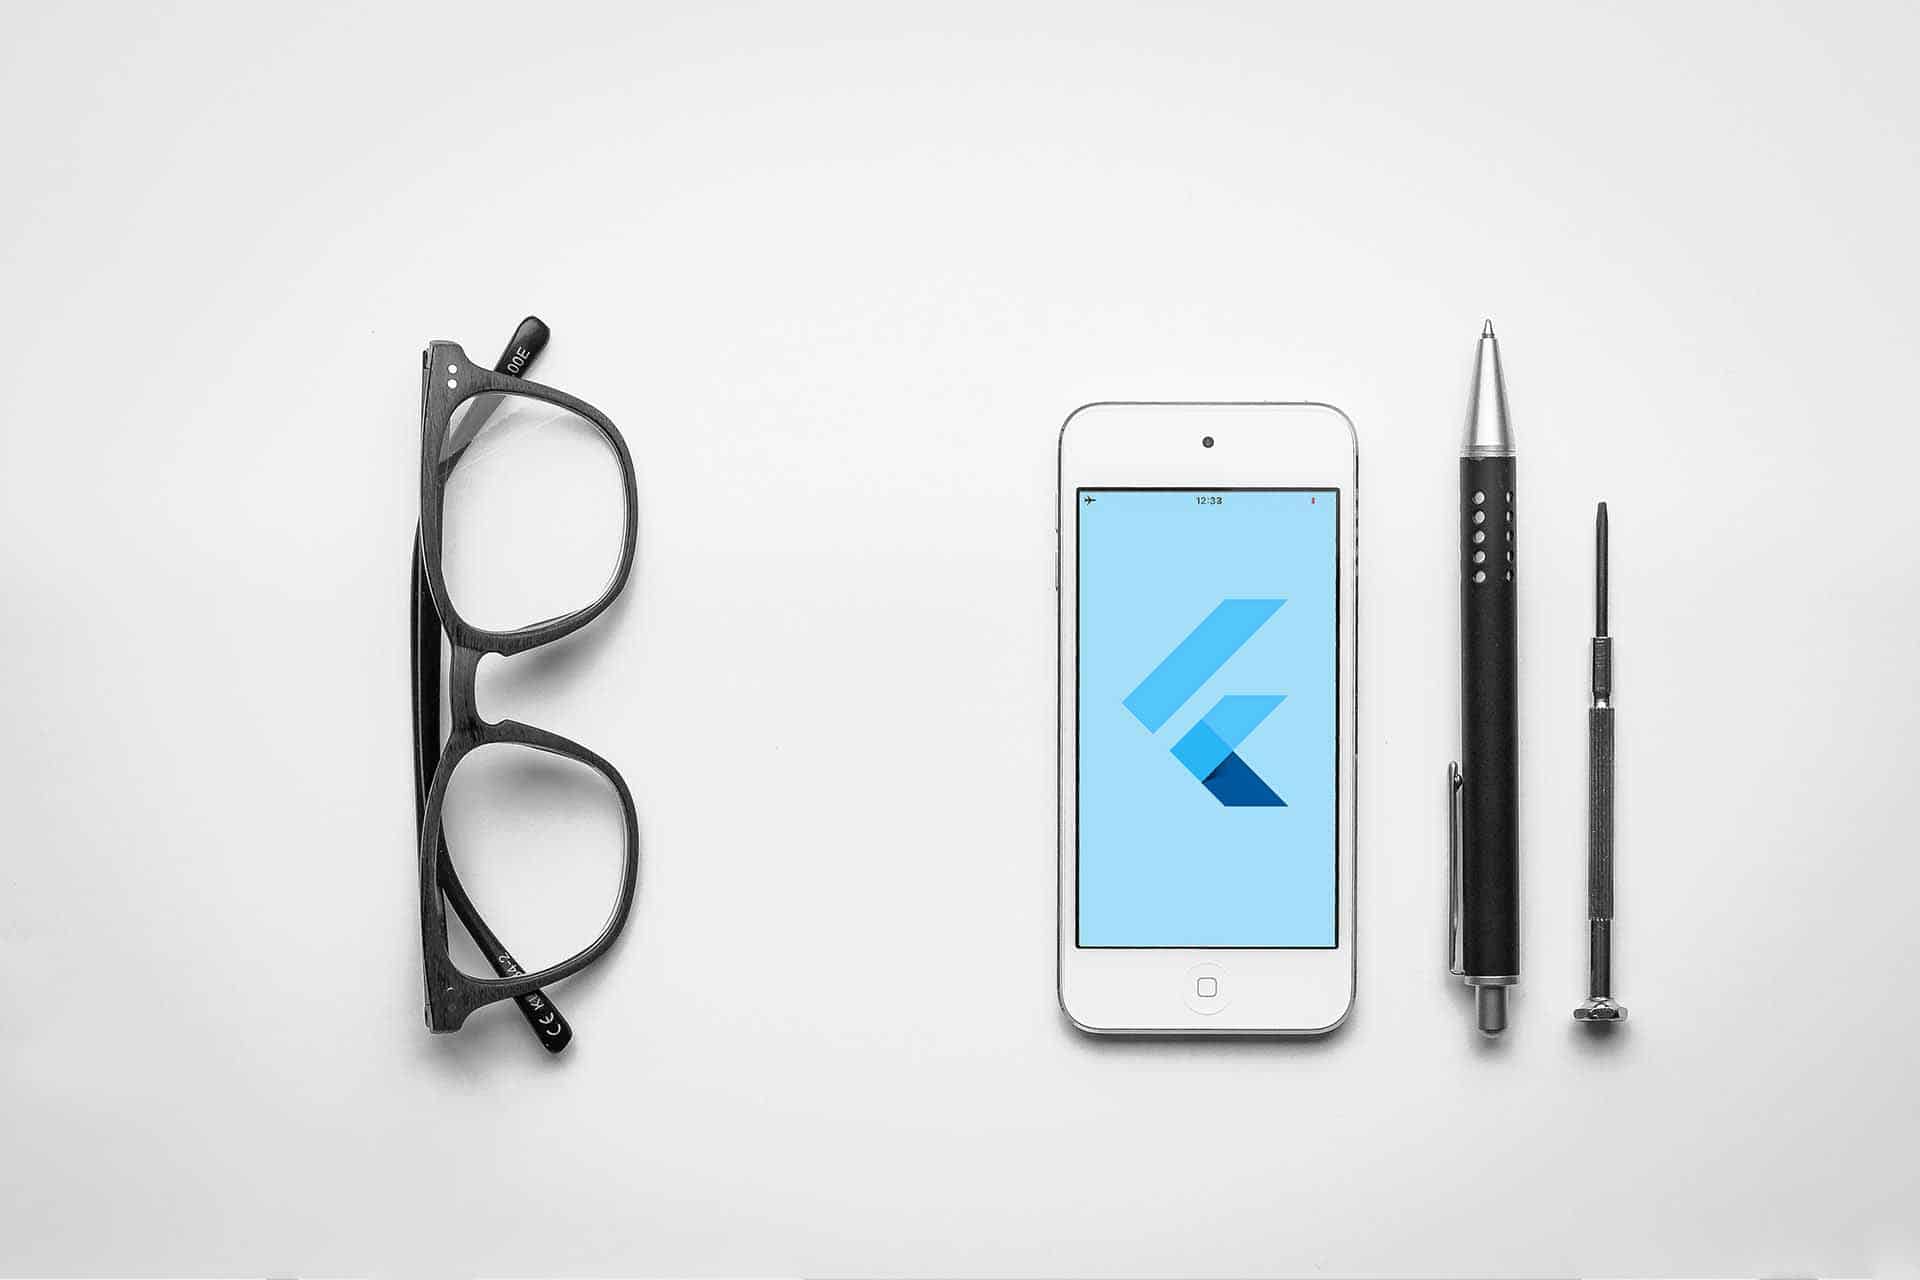 t2informatik Blog: Create smartphone applications with Flutter